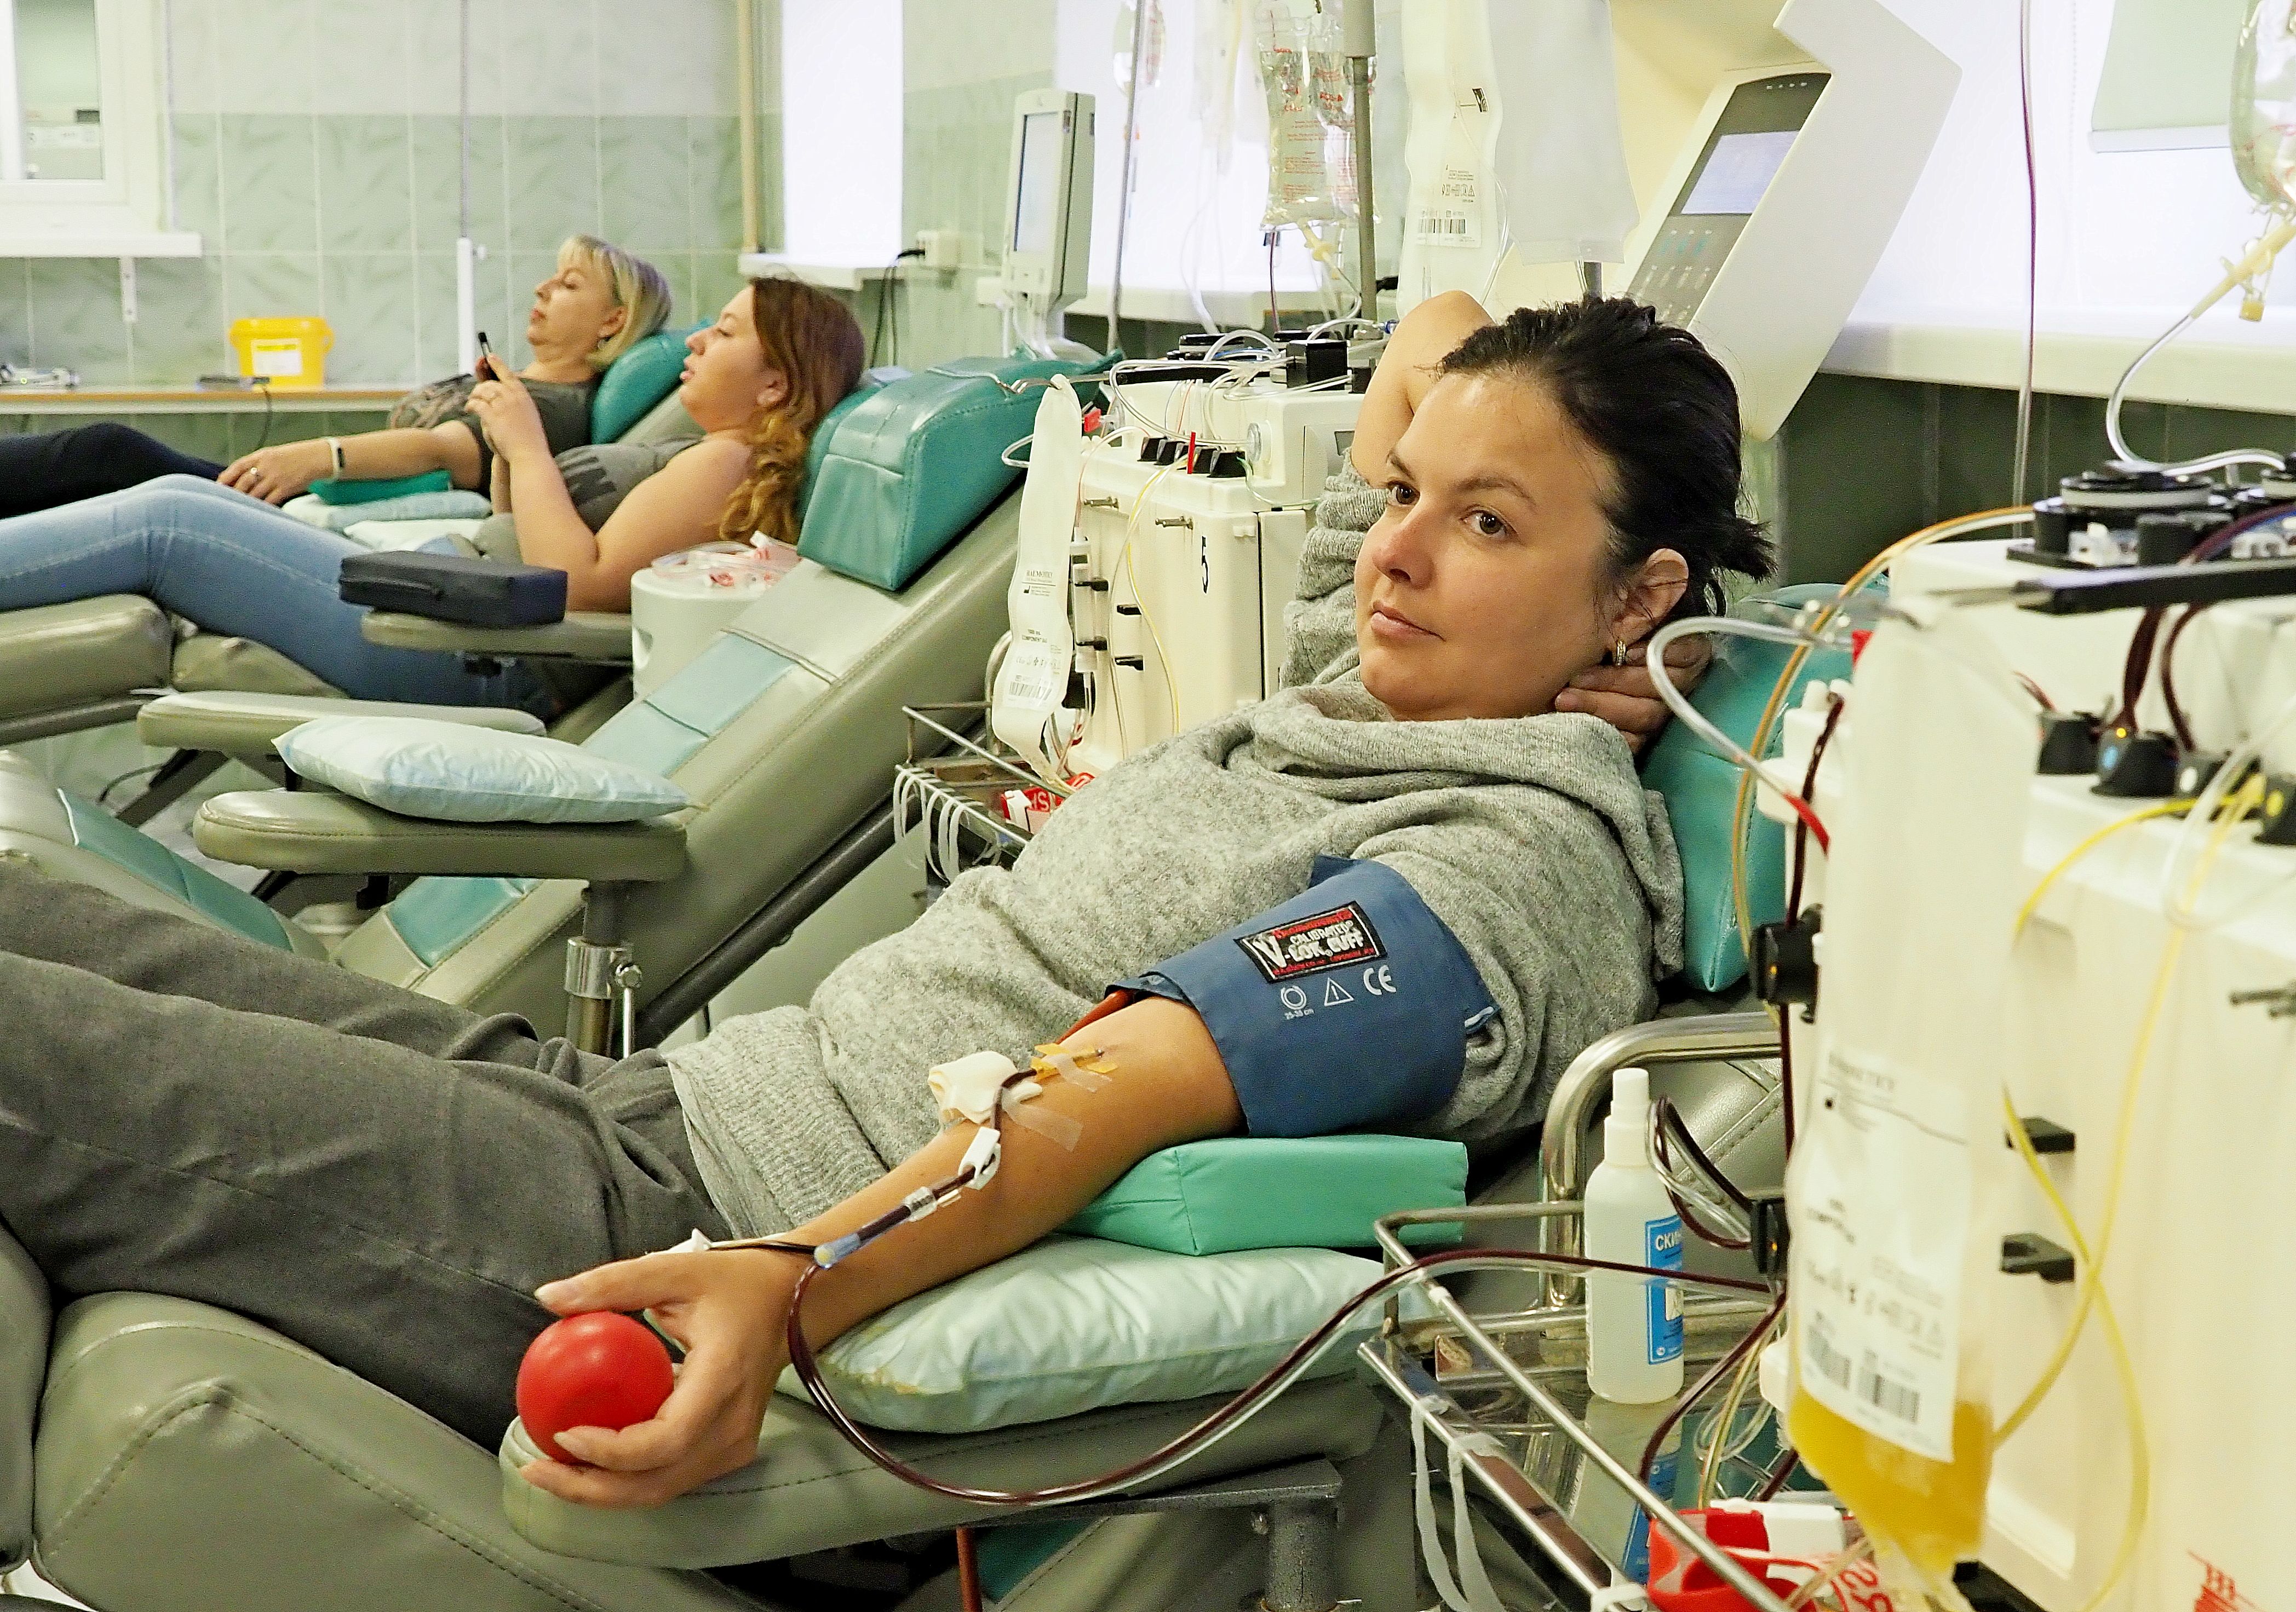 Переливание крови спасло жизнь. Сдачамкрови на донорство.